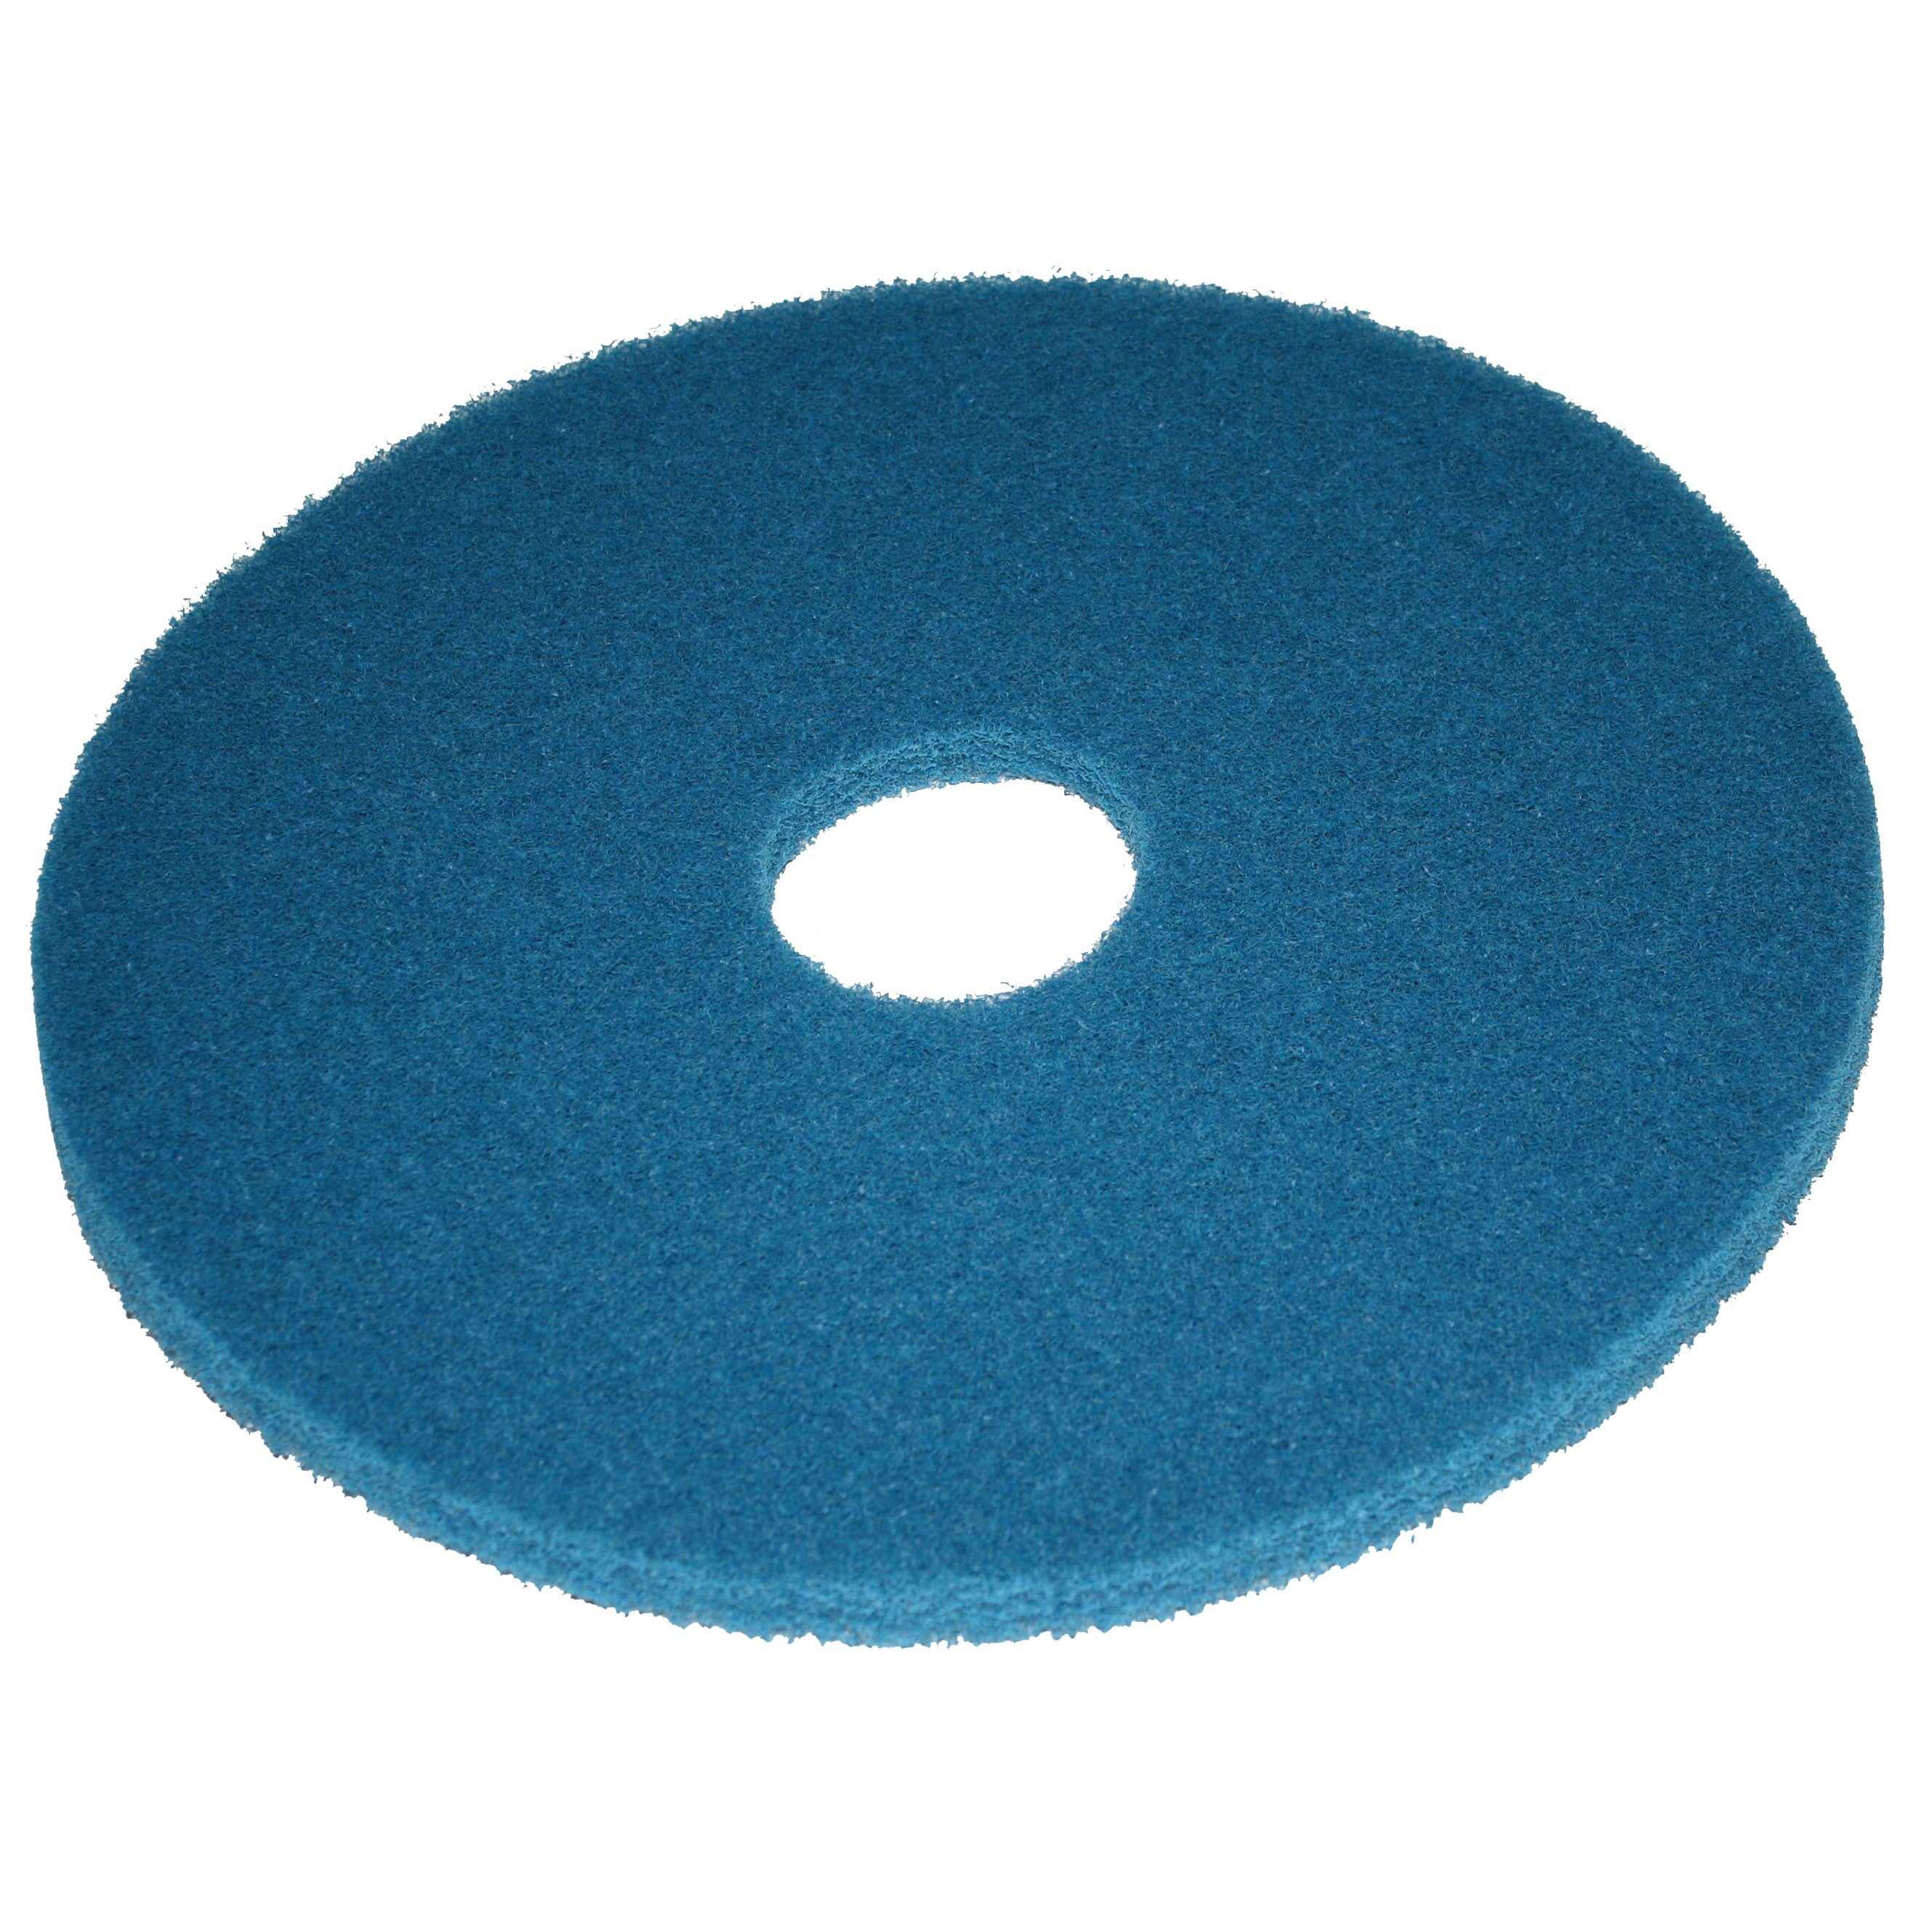 Pad blau, Ø 457 mm, Polyester